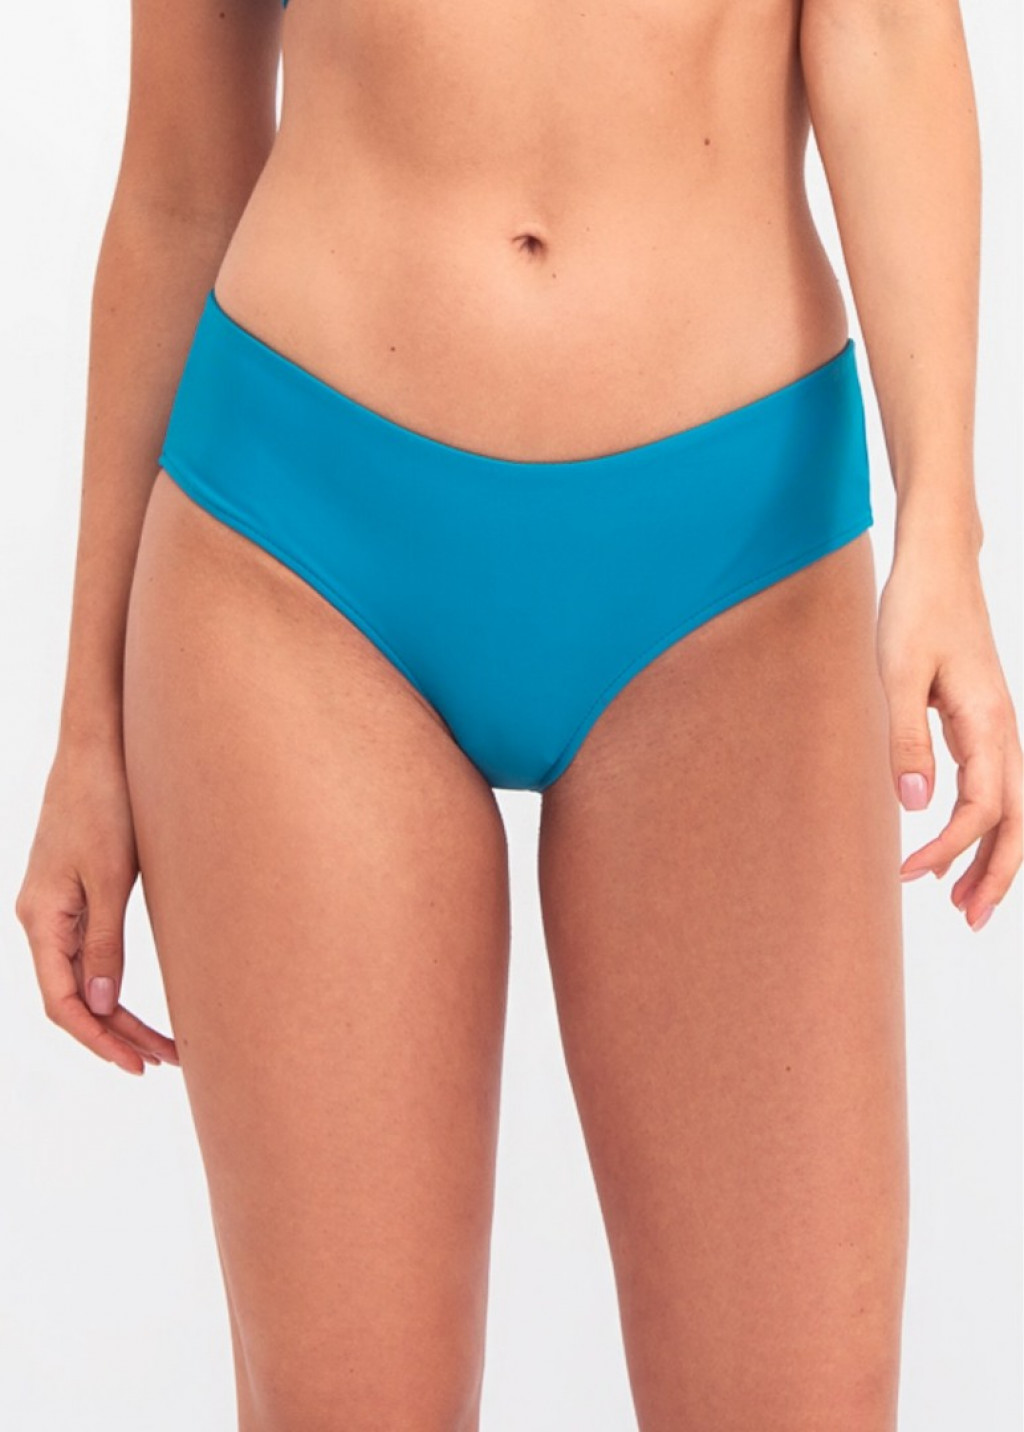 Blue Brazilian Bikini Bottom And Sports Top